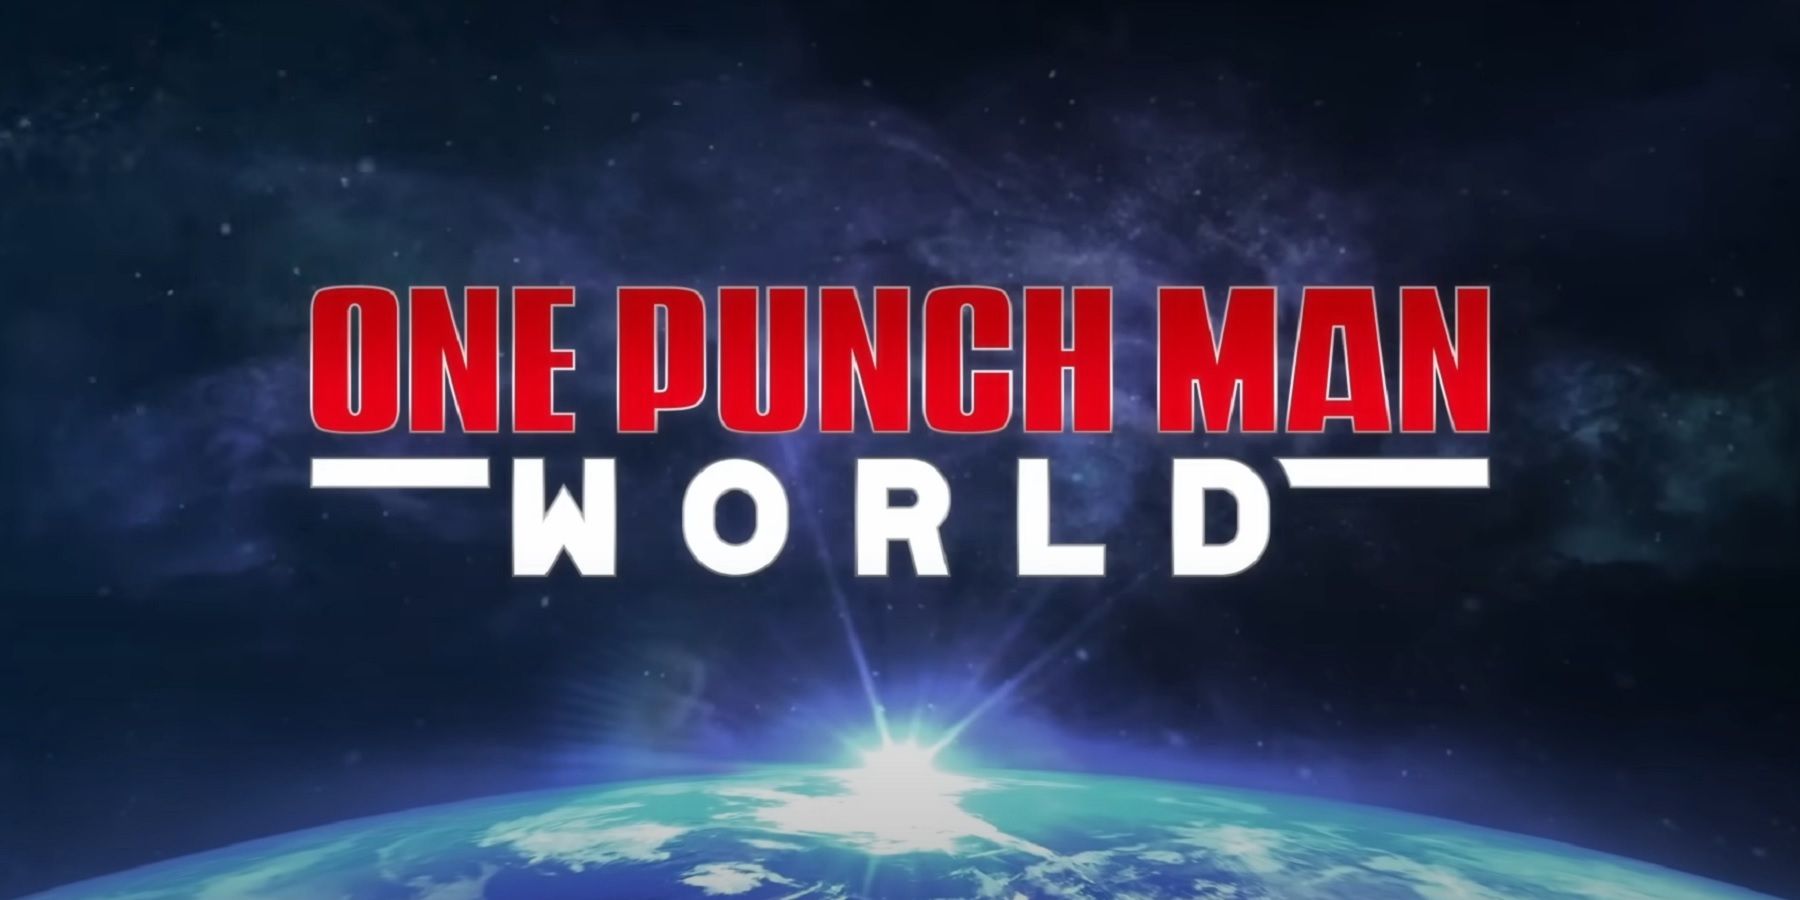 One Punch Man | Hypebeast